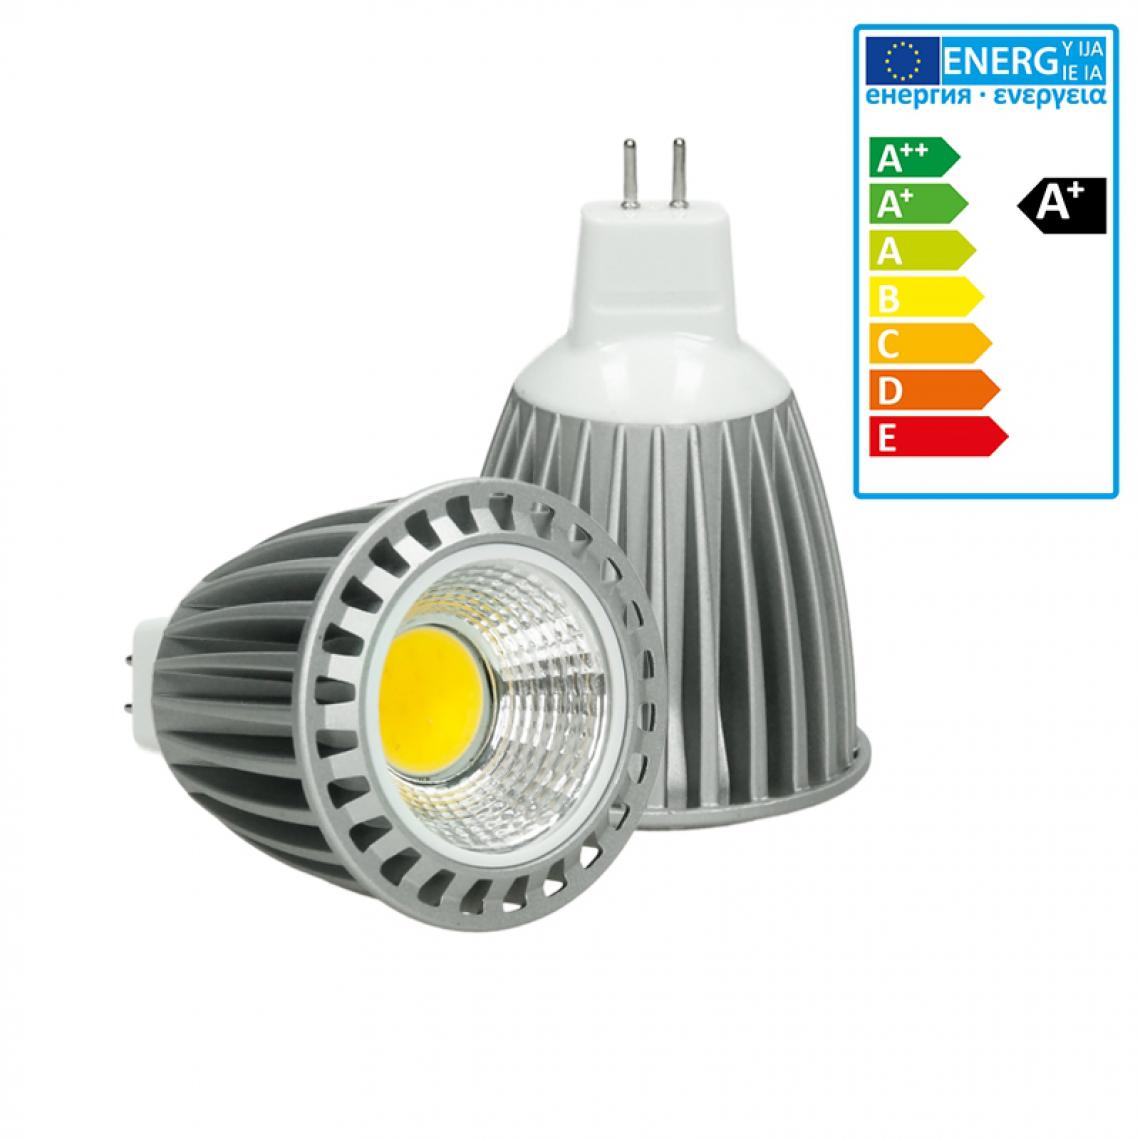 Ecd Germany - ECD Germany LED COB MR16 Spot Lampe Ampoule 9W blanc froid - Ampoules LED